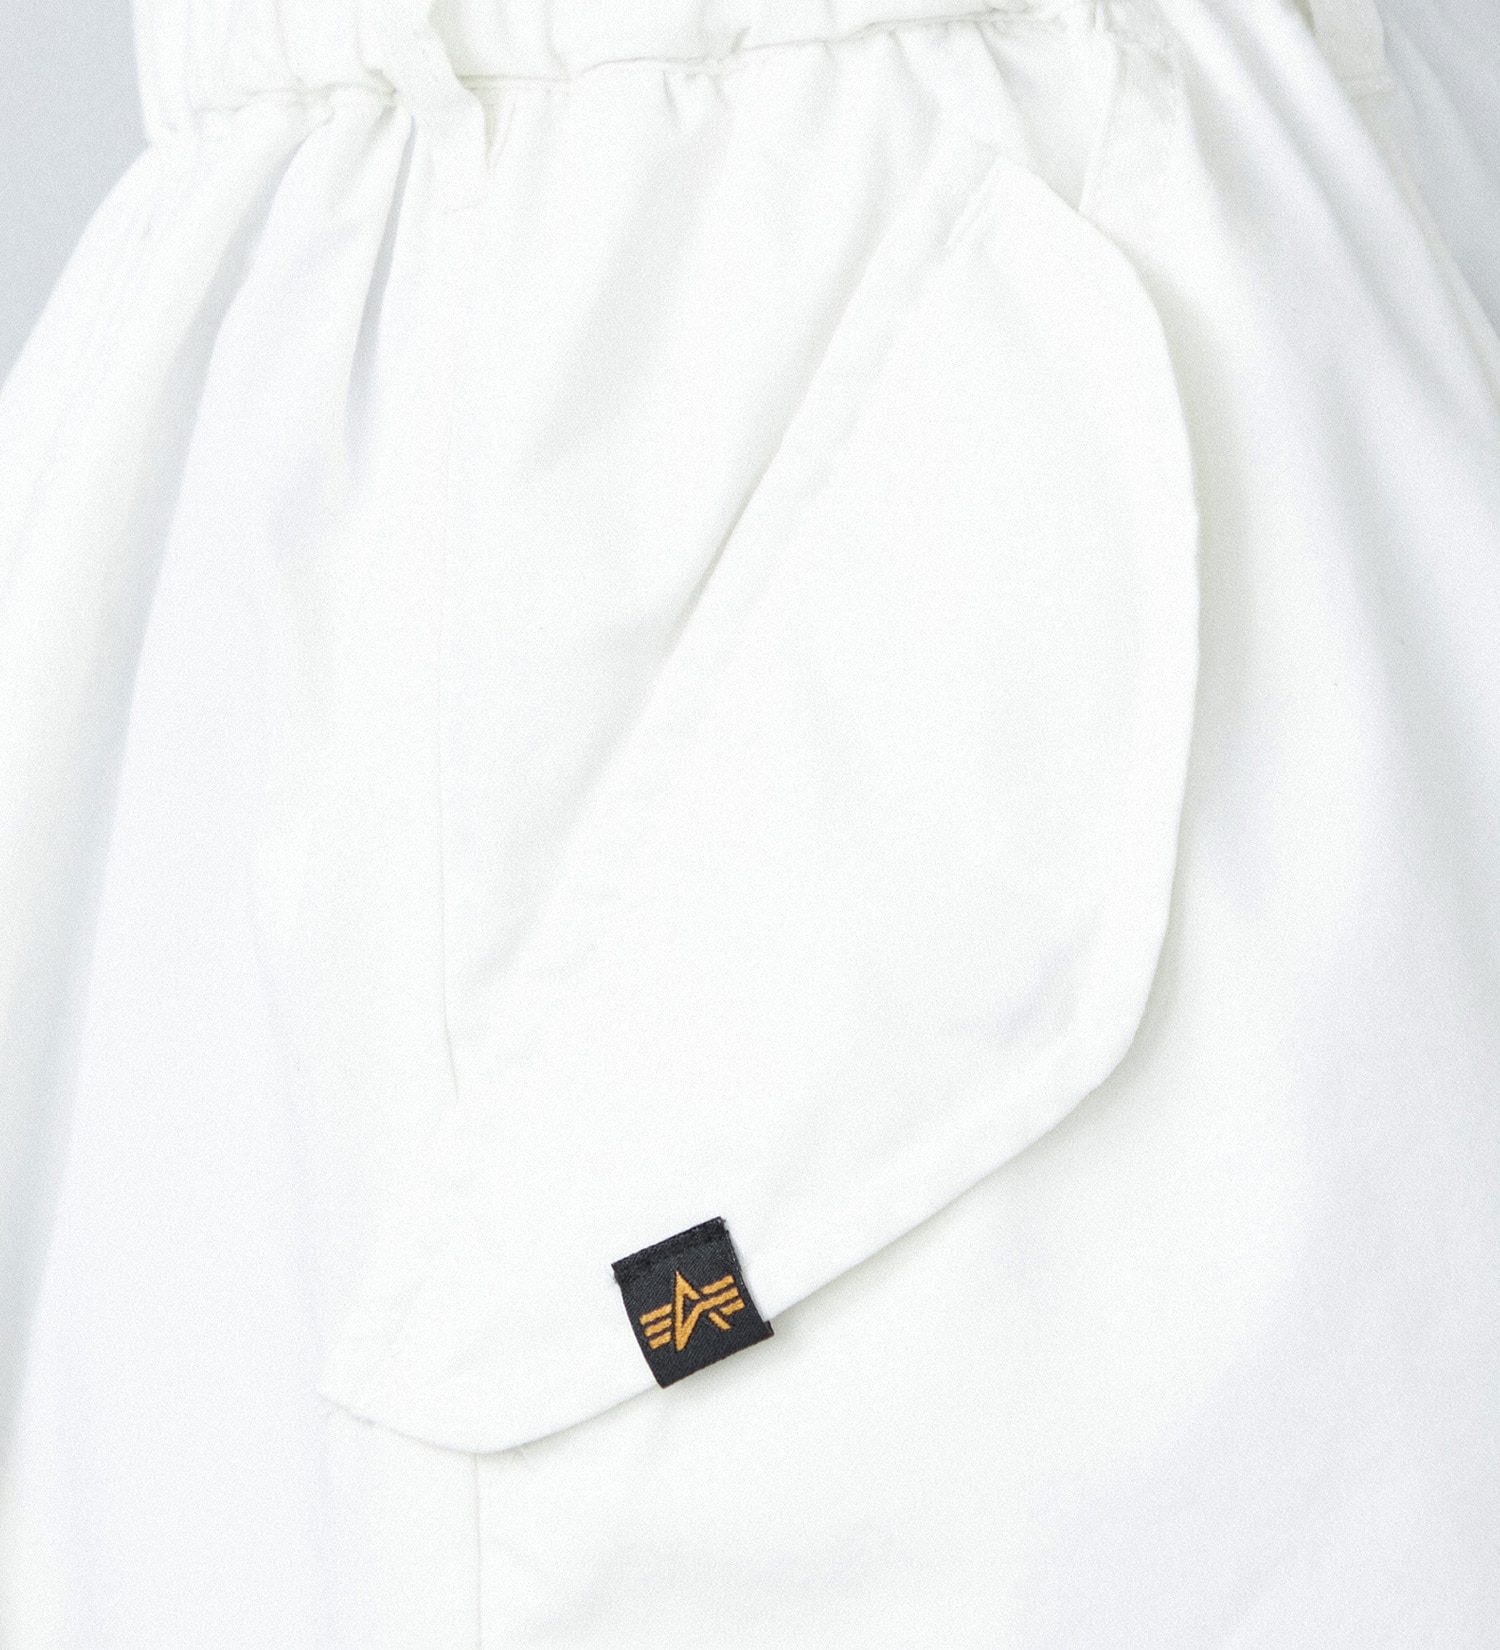 ALPHA(アルファ)の【GW SALE】モッズミリタリースカート|スカート/スカート/レディース|オフホワイト